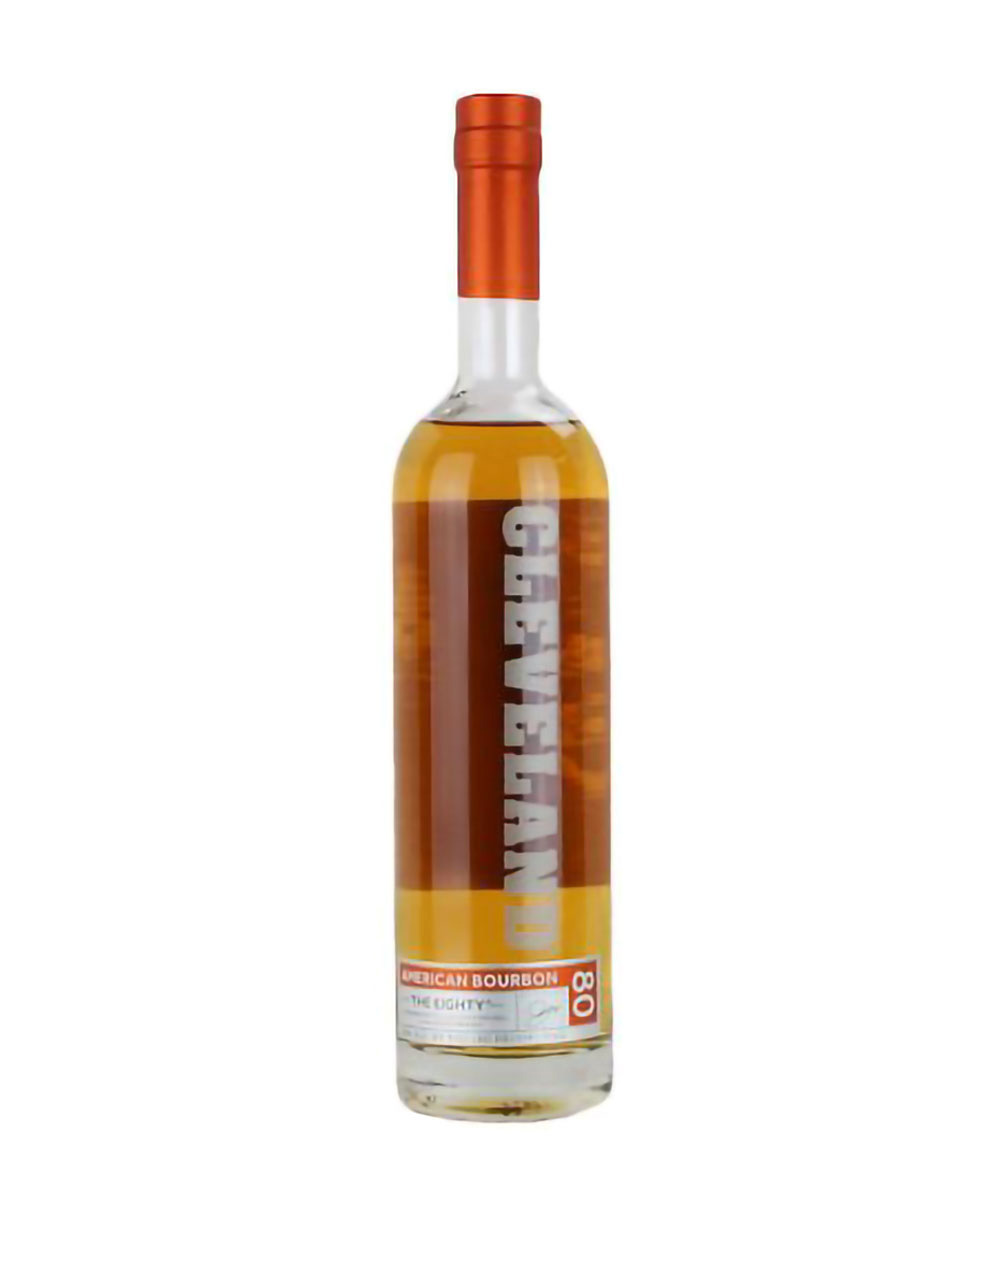 Clynelish 15 Year Old Single Malt Scotch Whisky (Signatory Bottling)